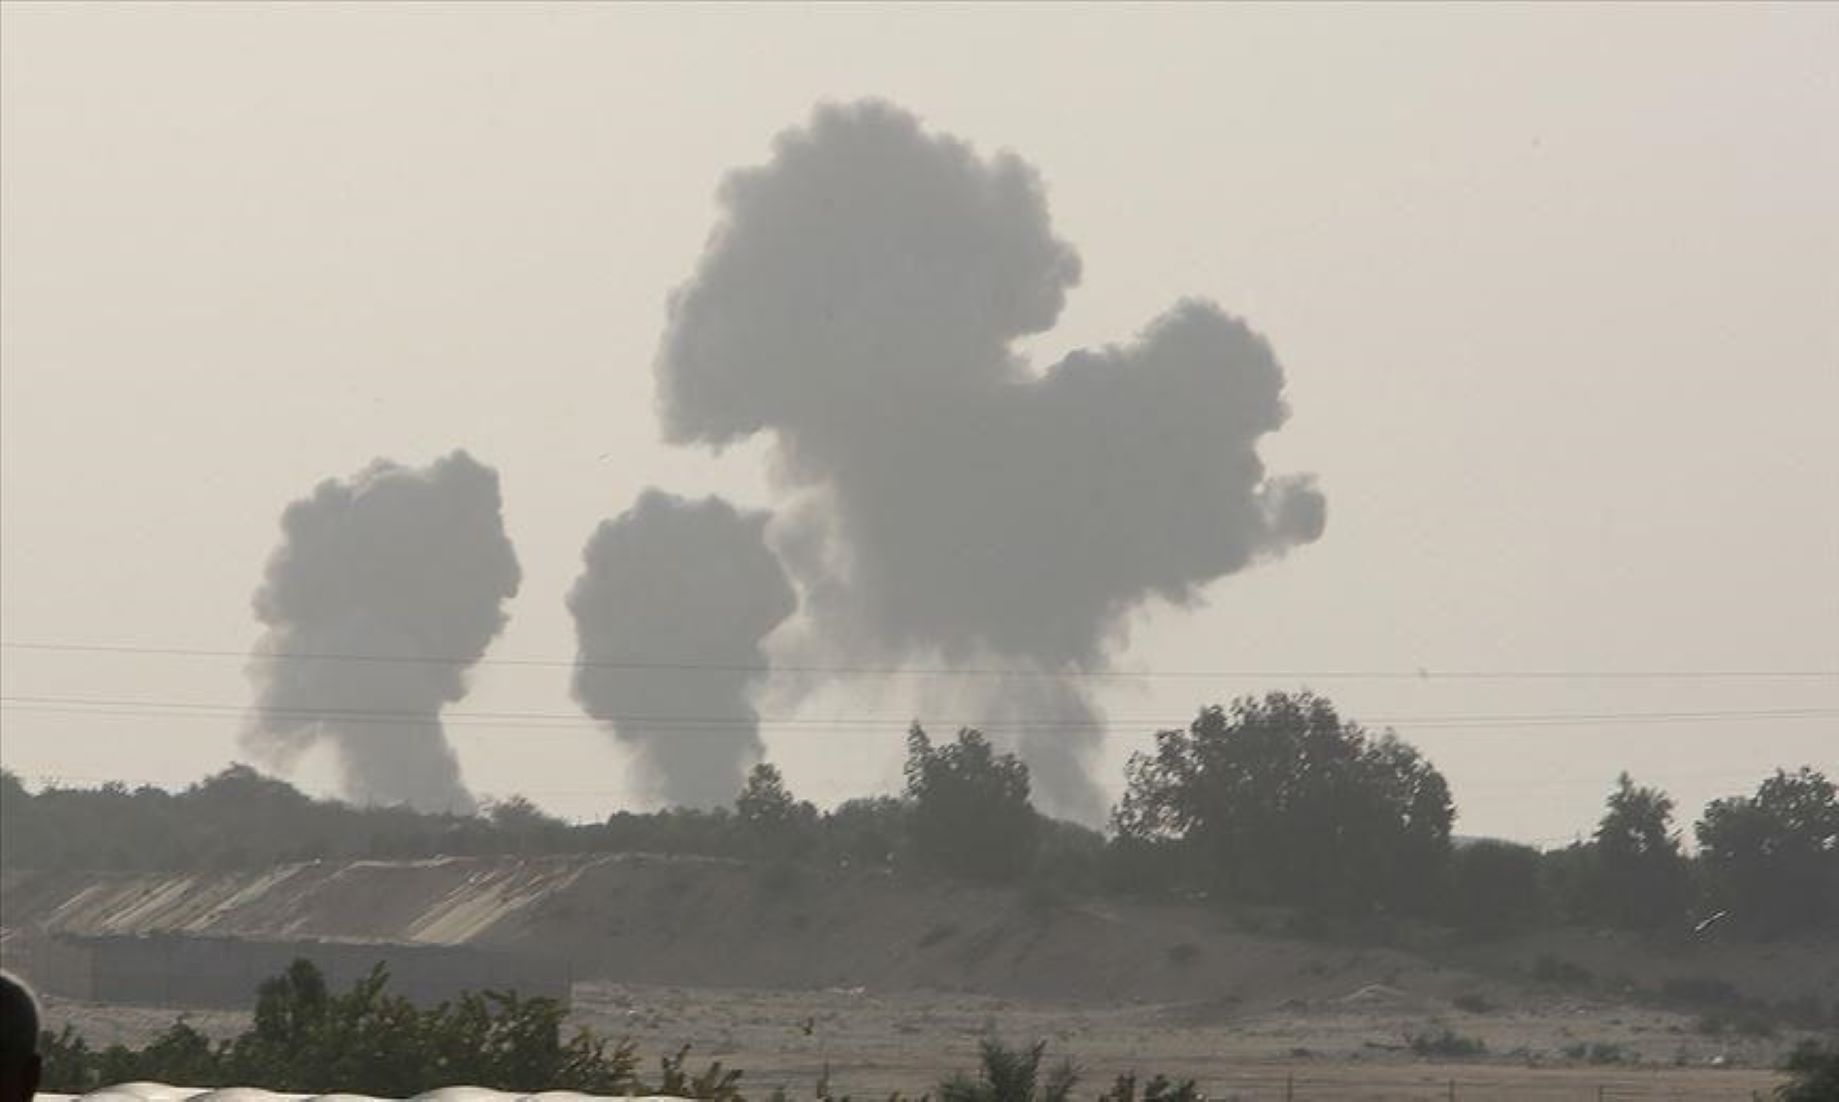 Three Daesh Militants Killed In Airstrikes In Iraq